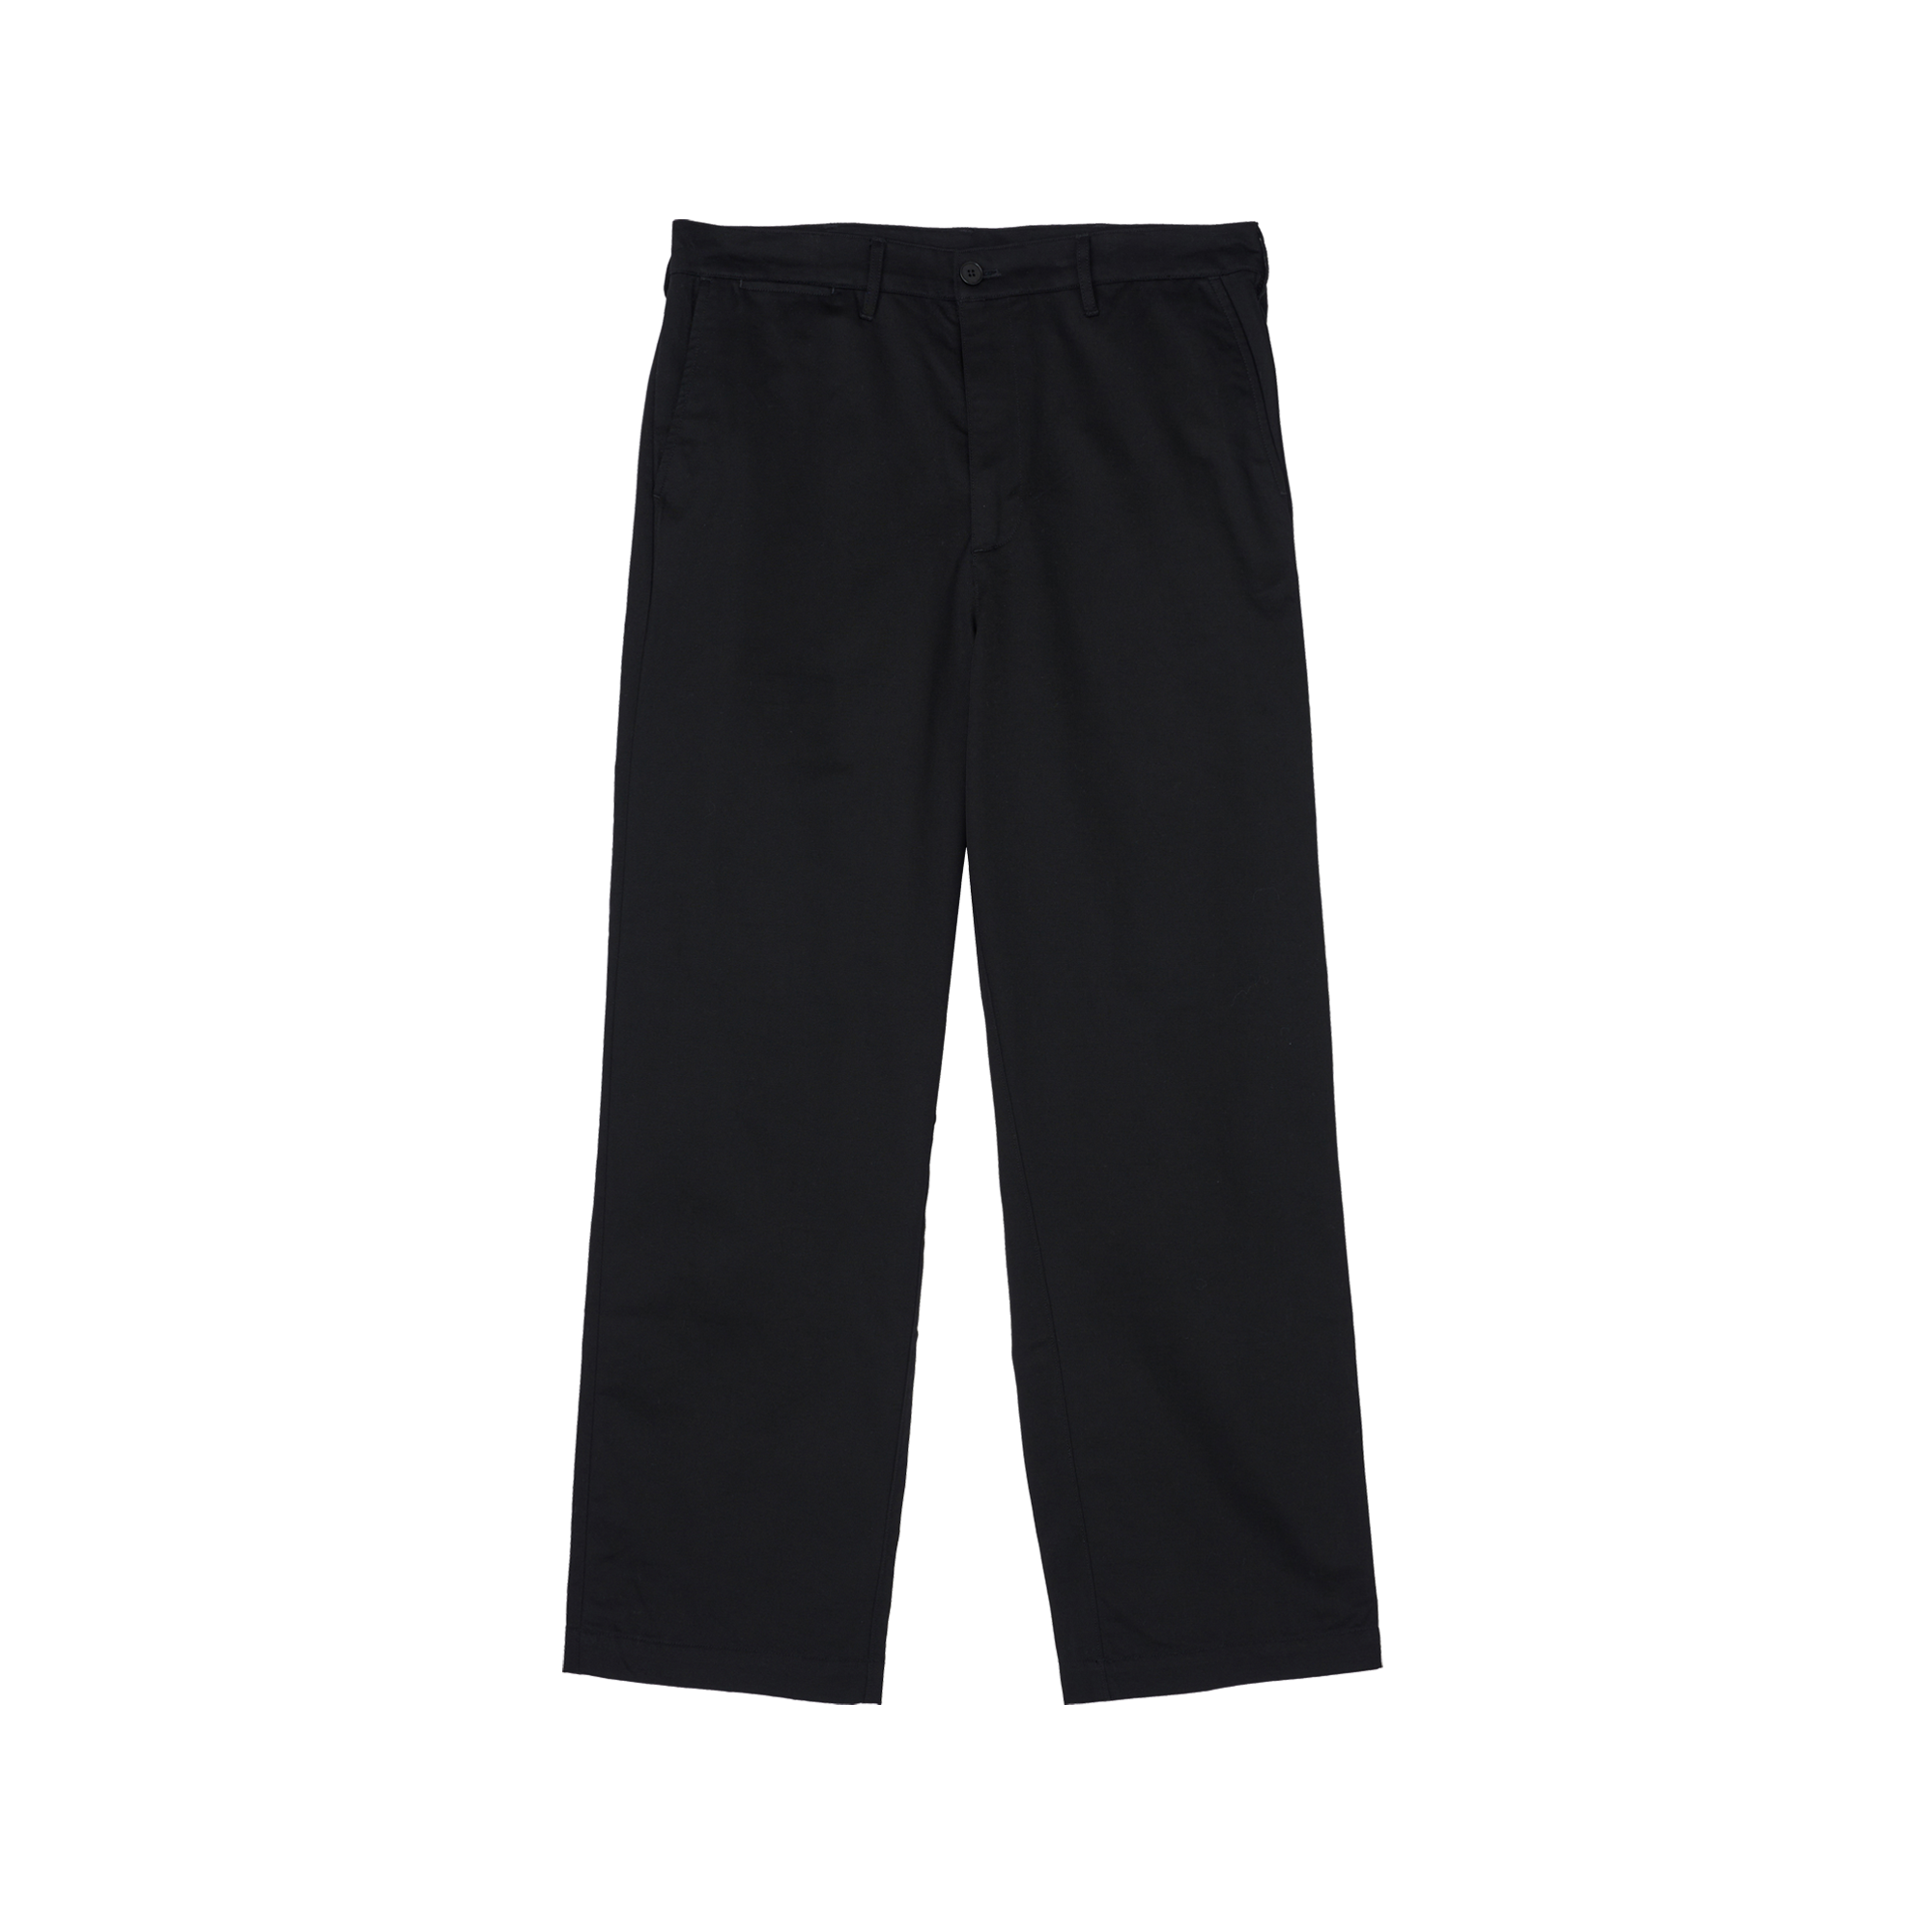 Regular Cotton Pants (Black)